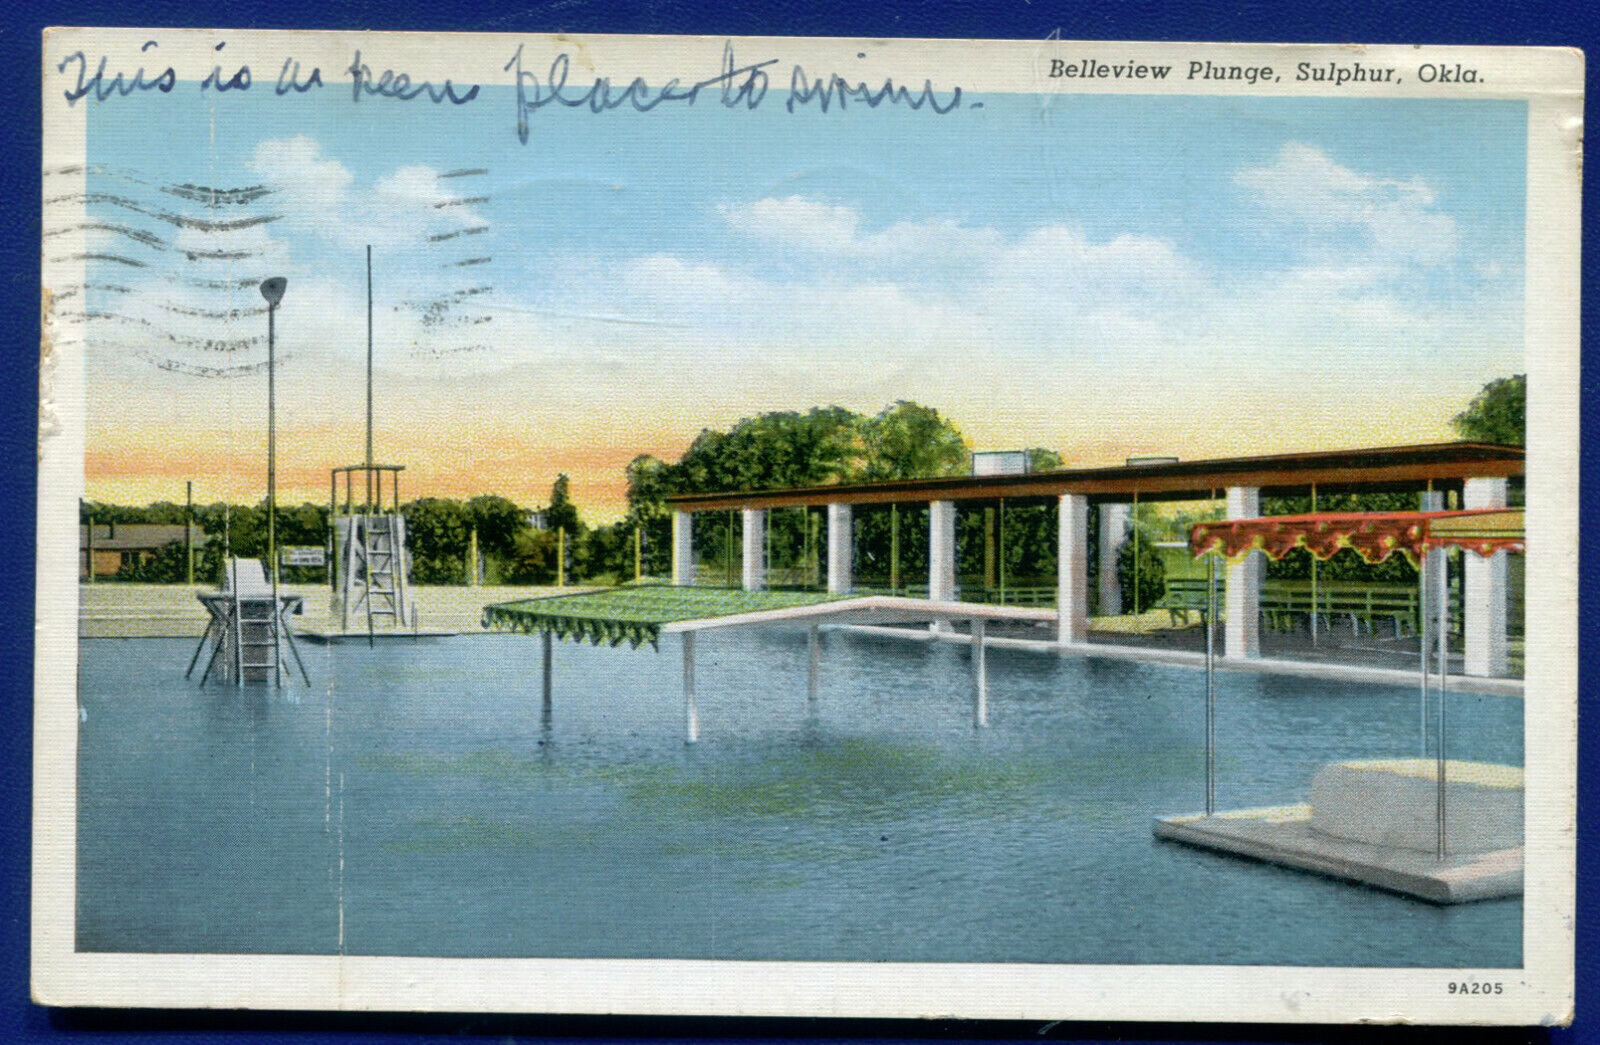 Belleview Plunge Sulphur Oklahoma ok postmarked 1940 old postcard